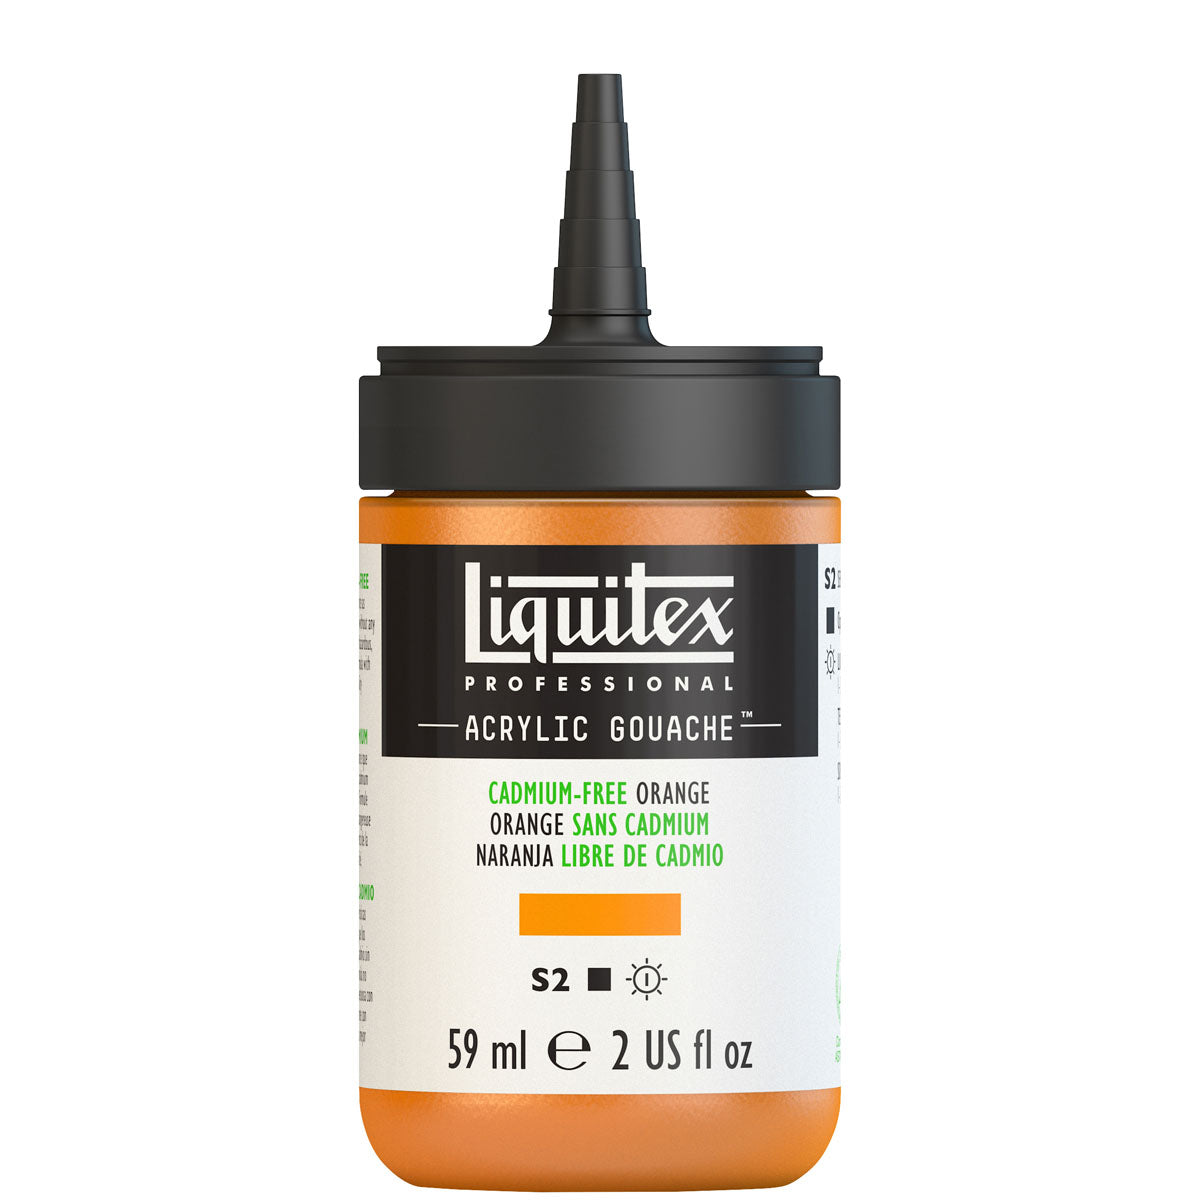 Liquitex - Acrylic Gouache 59ml S2 - Cadmium Free Orange